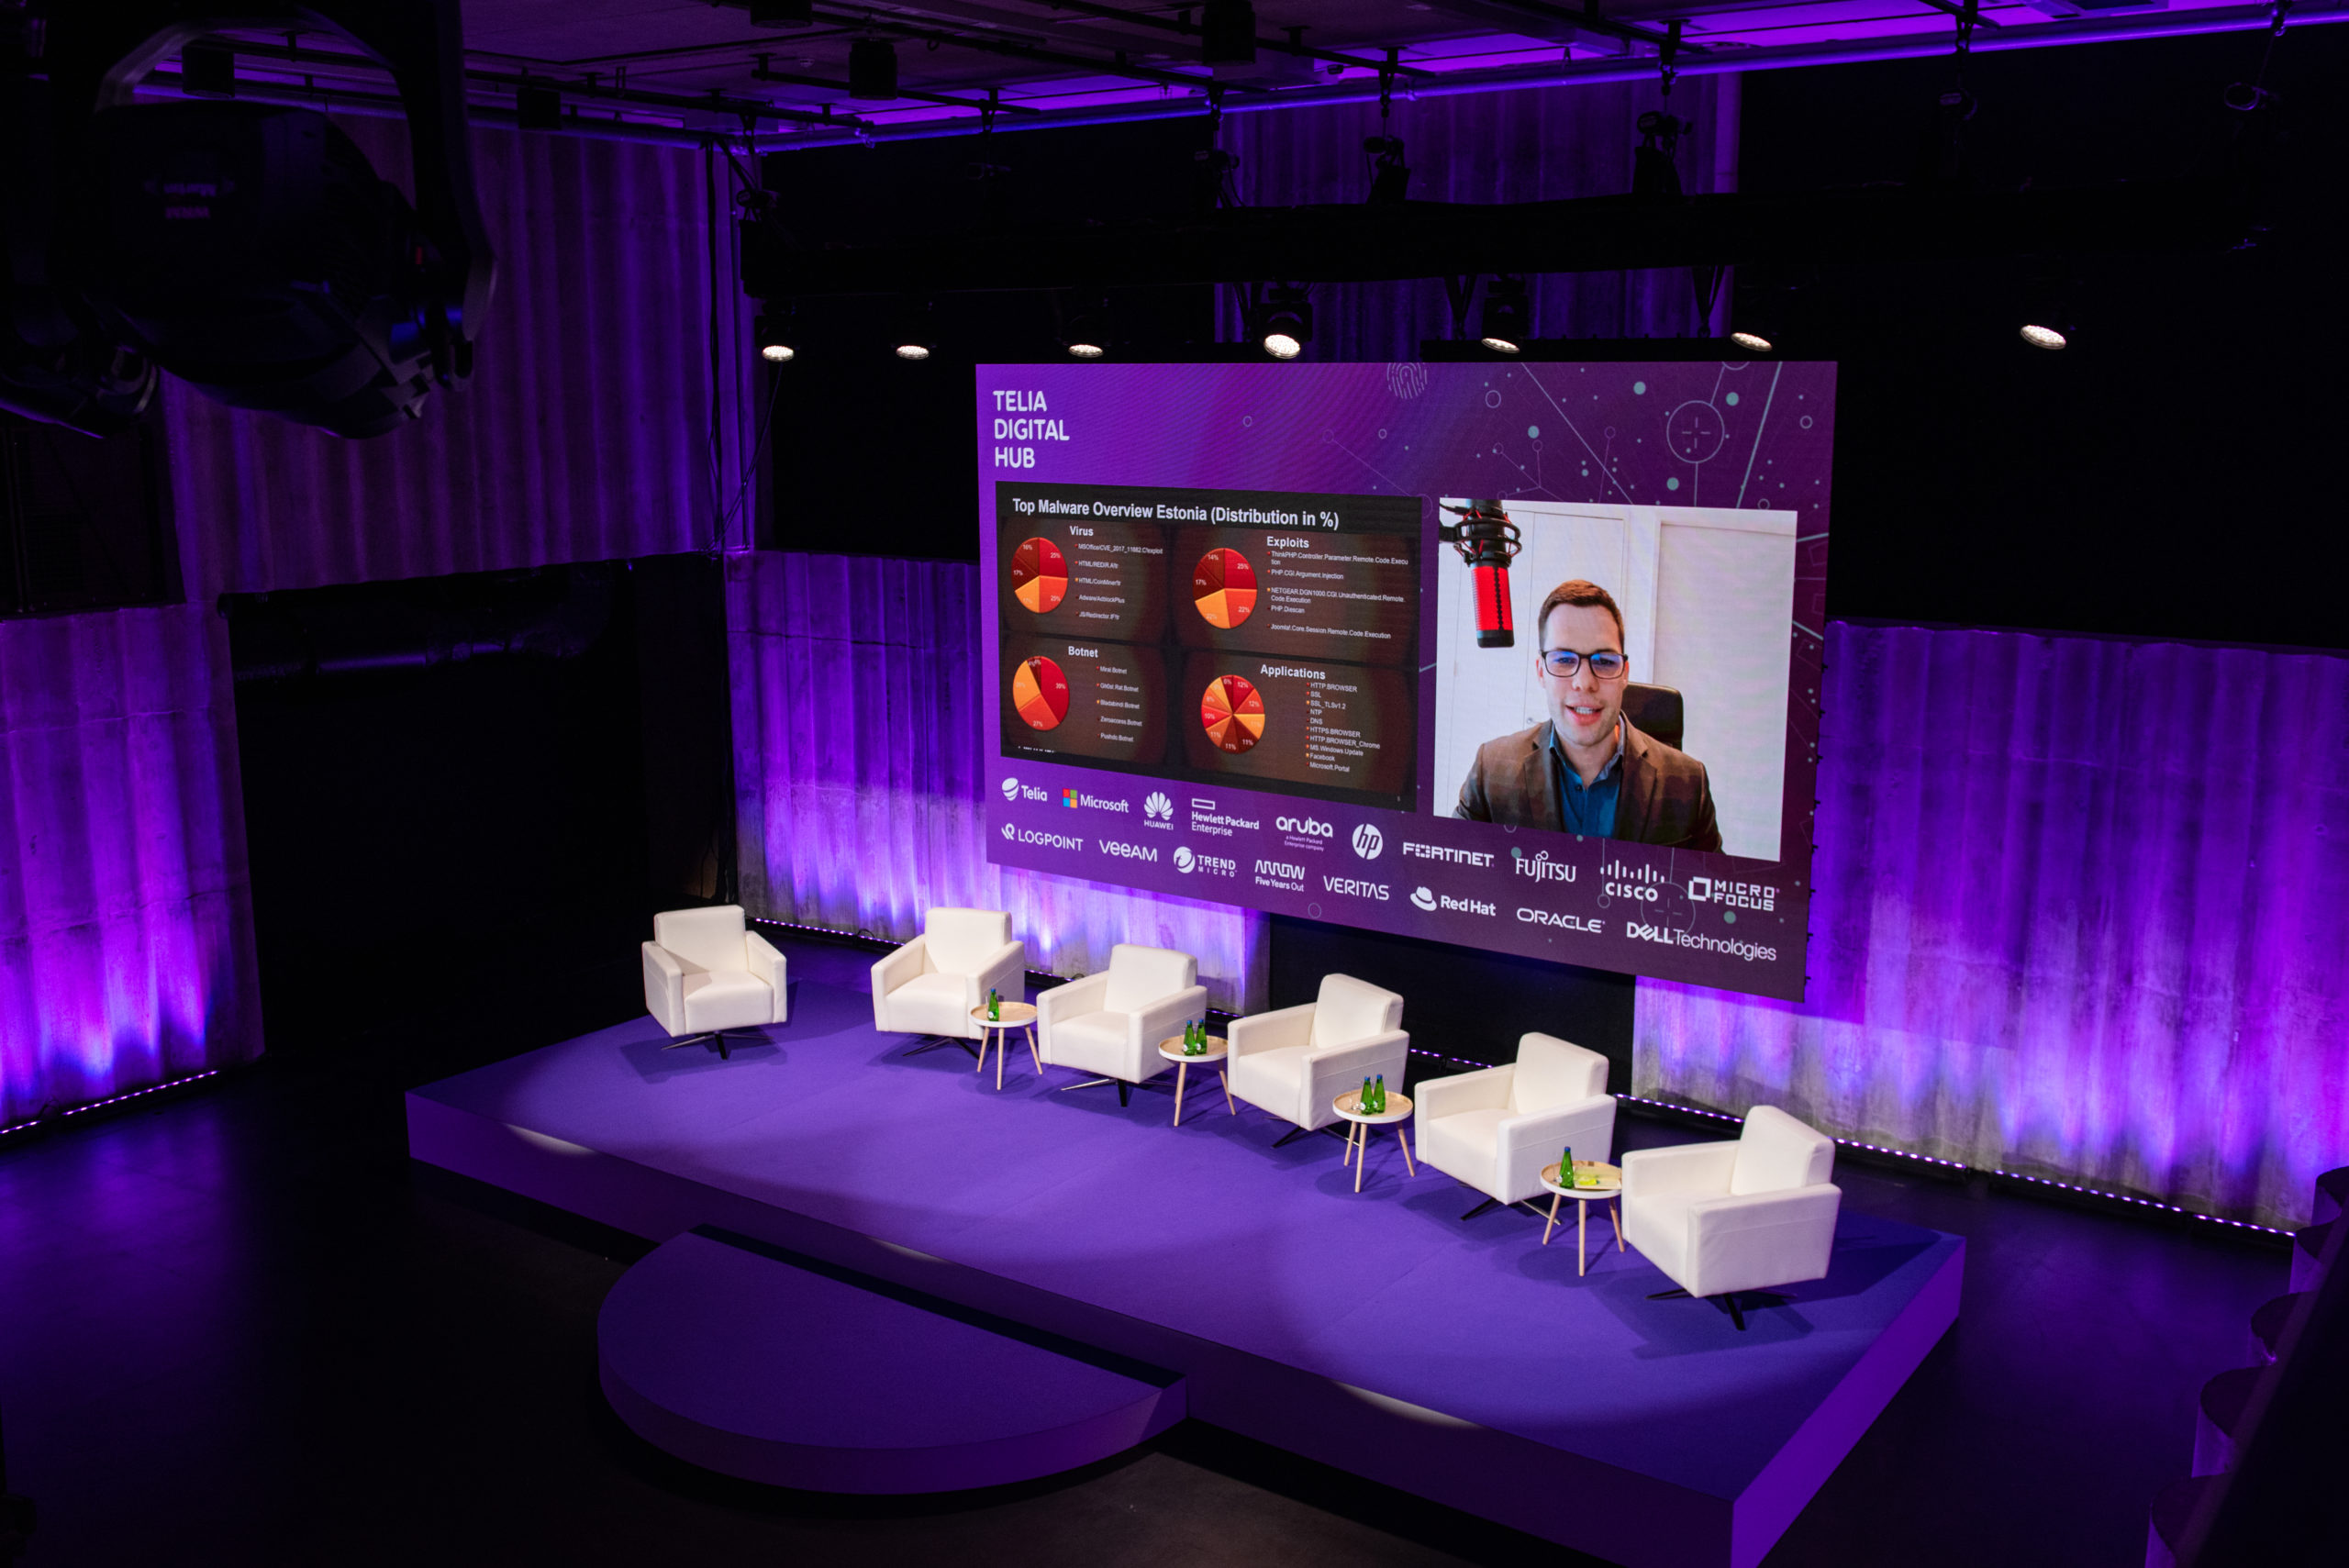 virtual stage of Telia event